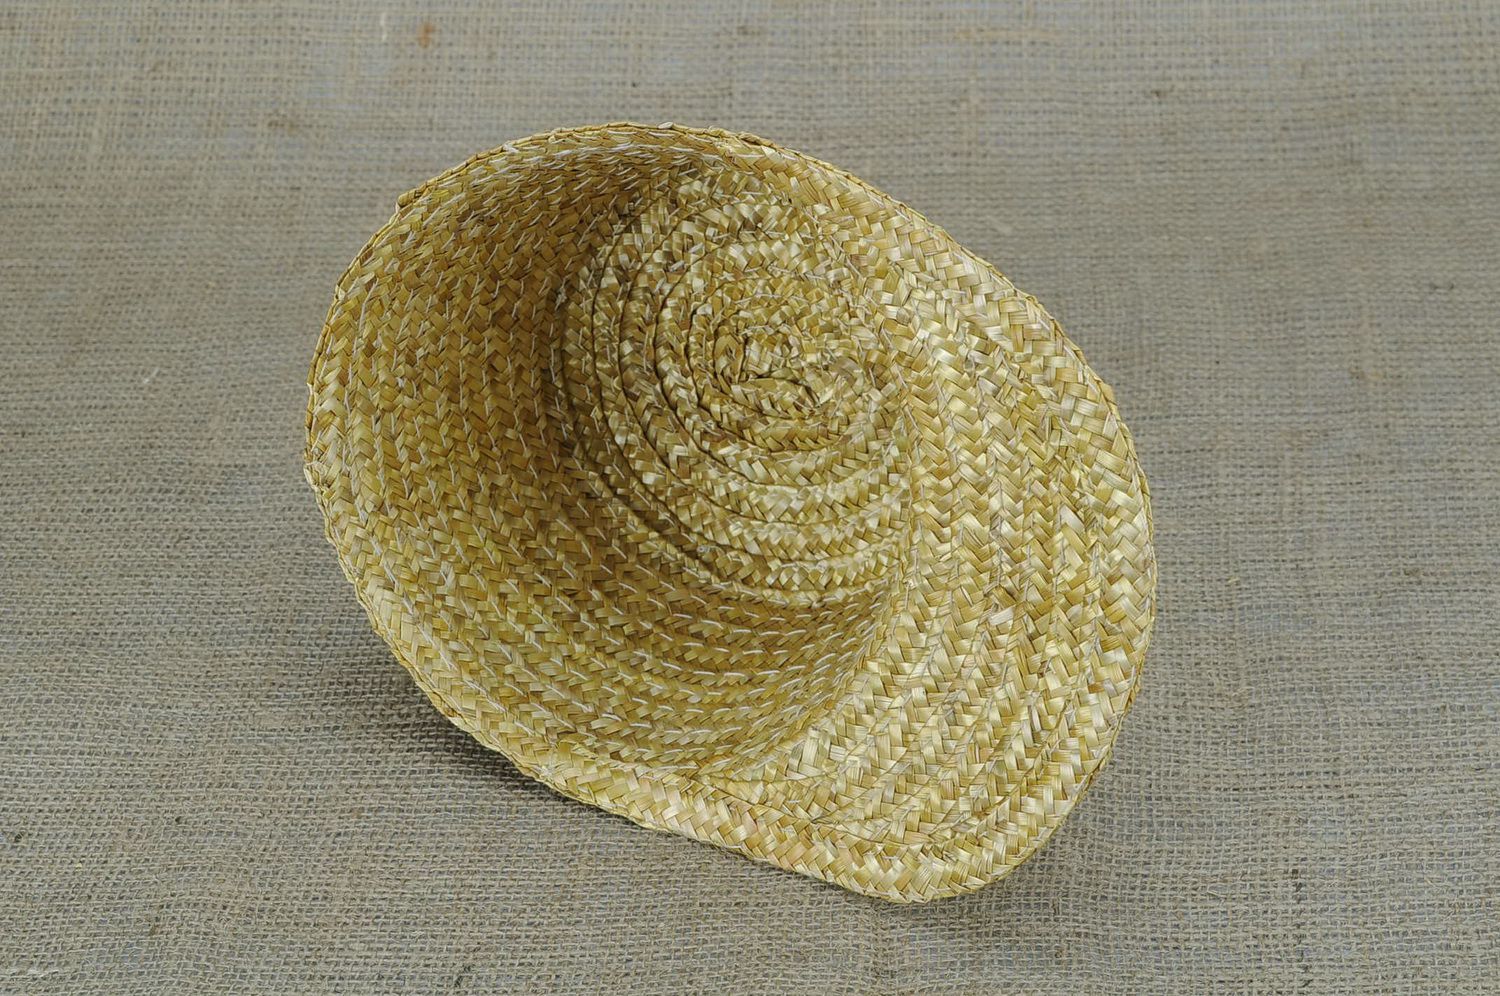 Men's peaked cap made of straw photo 4